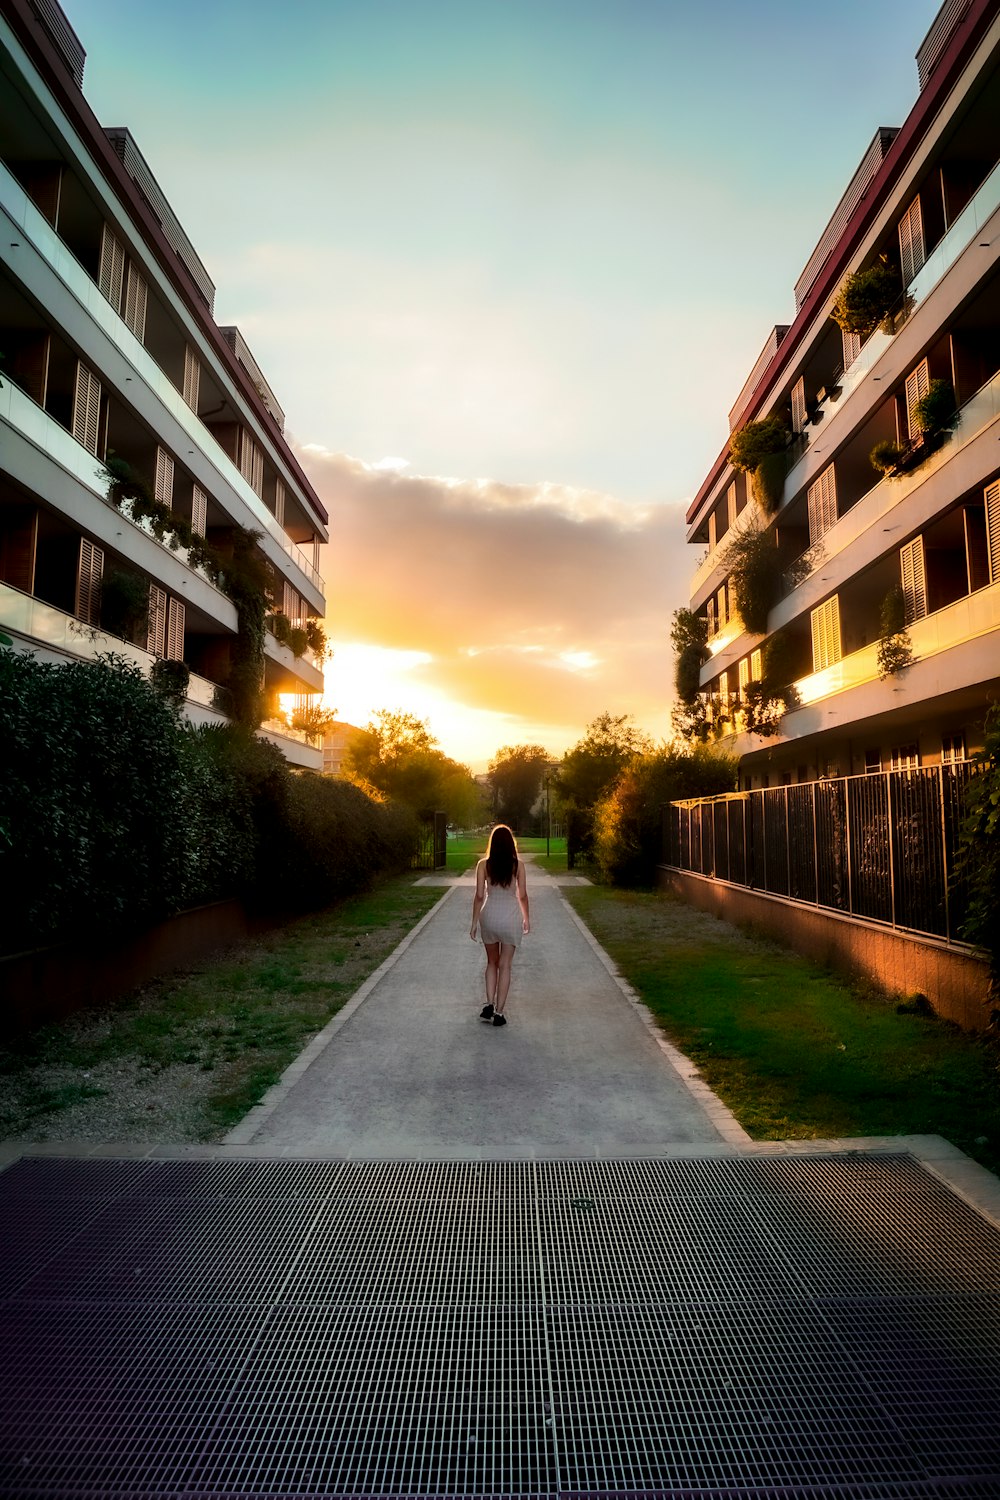 woman in white dress walking on pathway between buildings during daytime